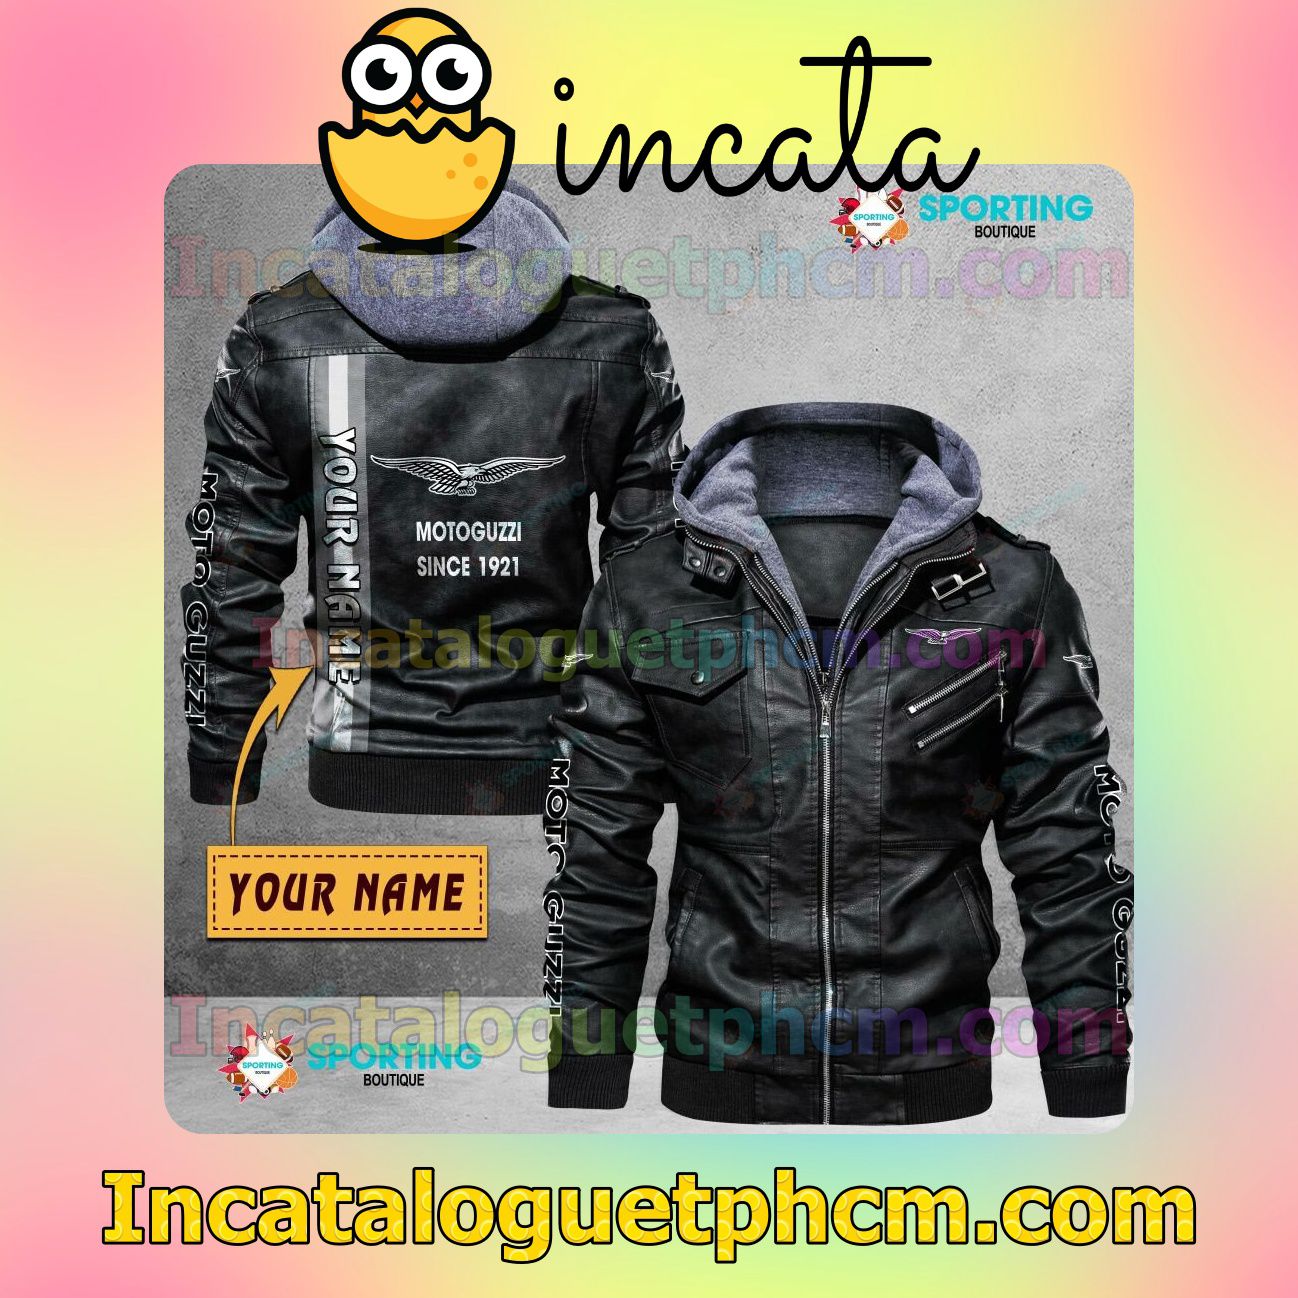 Motor Guzzi Customize Brand Uniform Leather Jacket